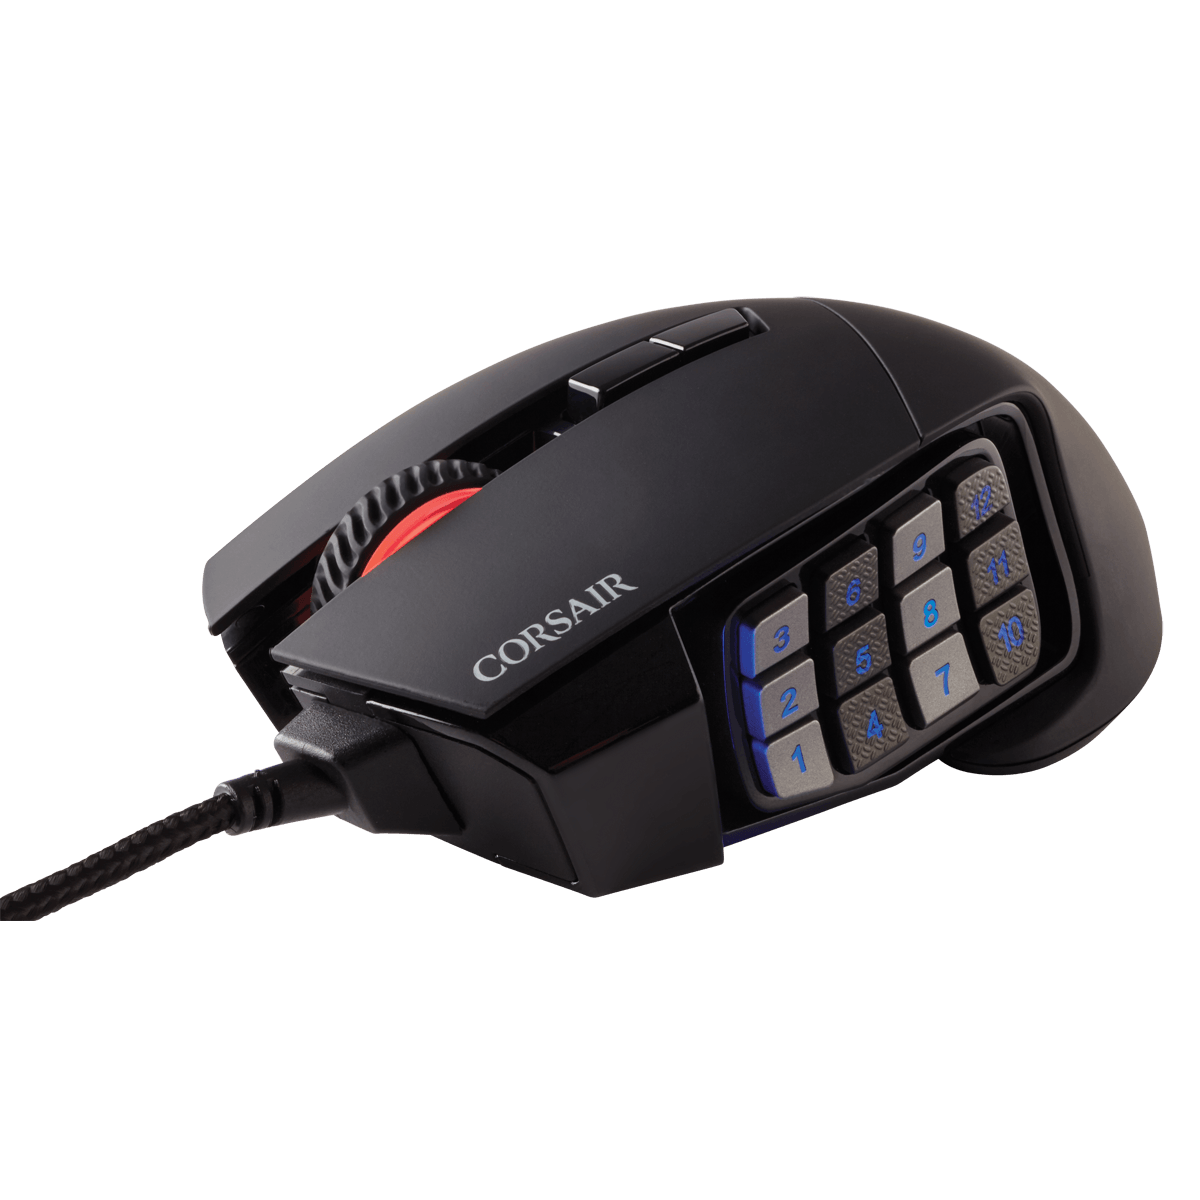 Mouse Corsair Scimitar RGB 12000 Dpi Black Ch-9000231-Na